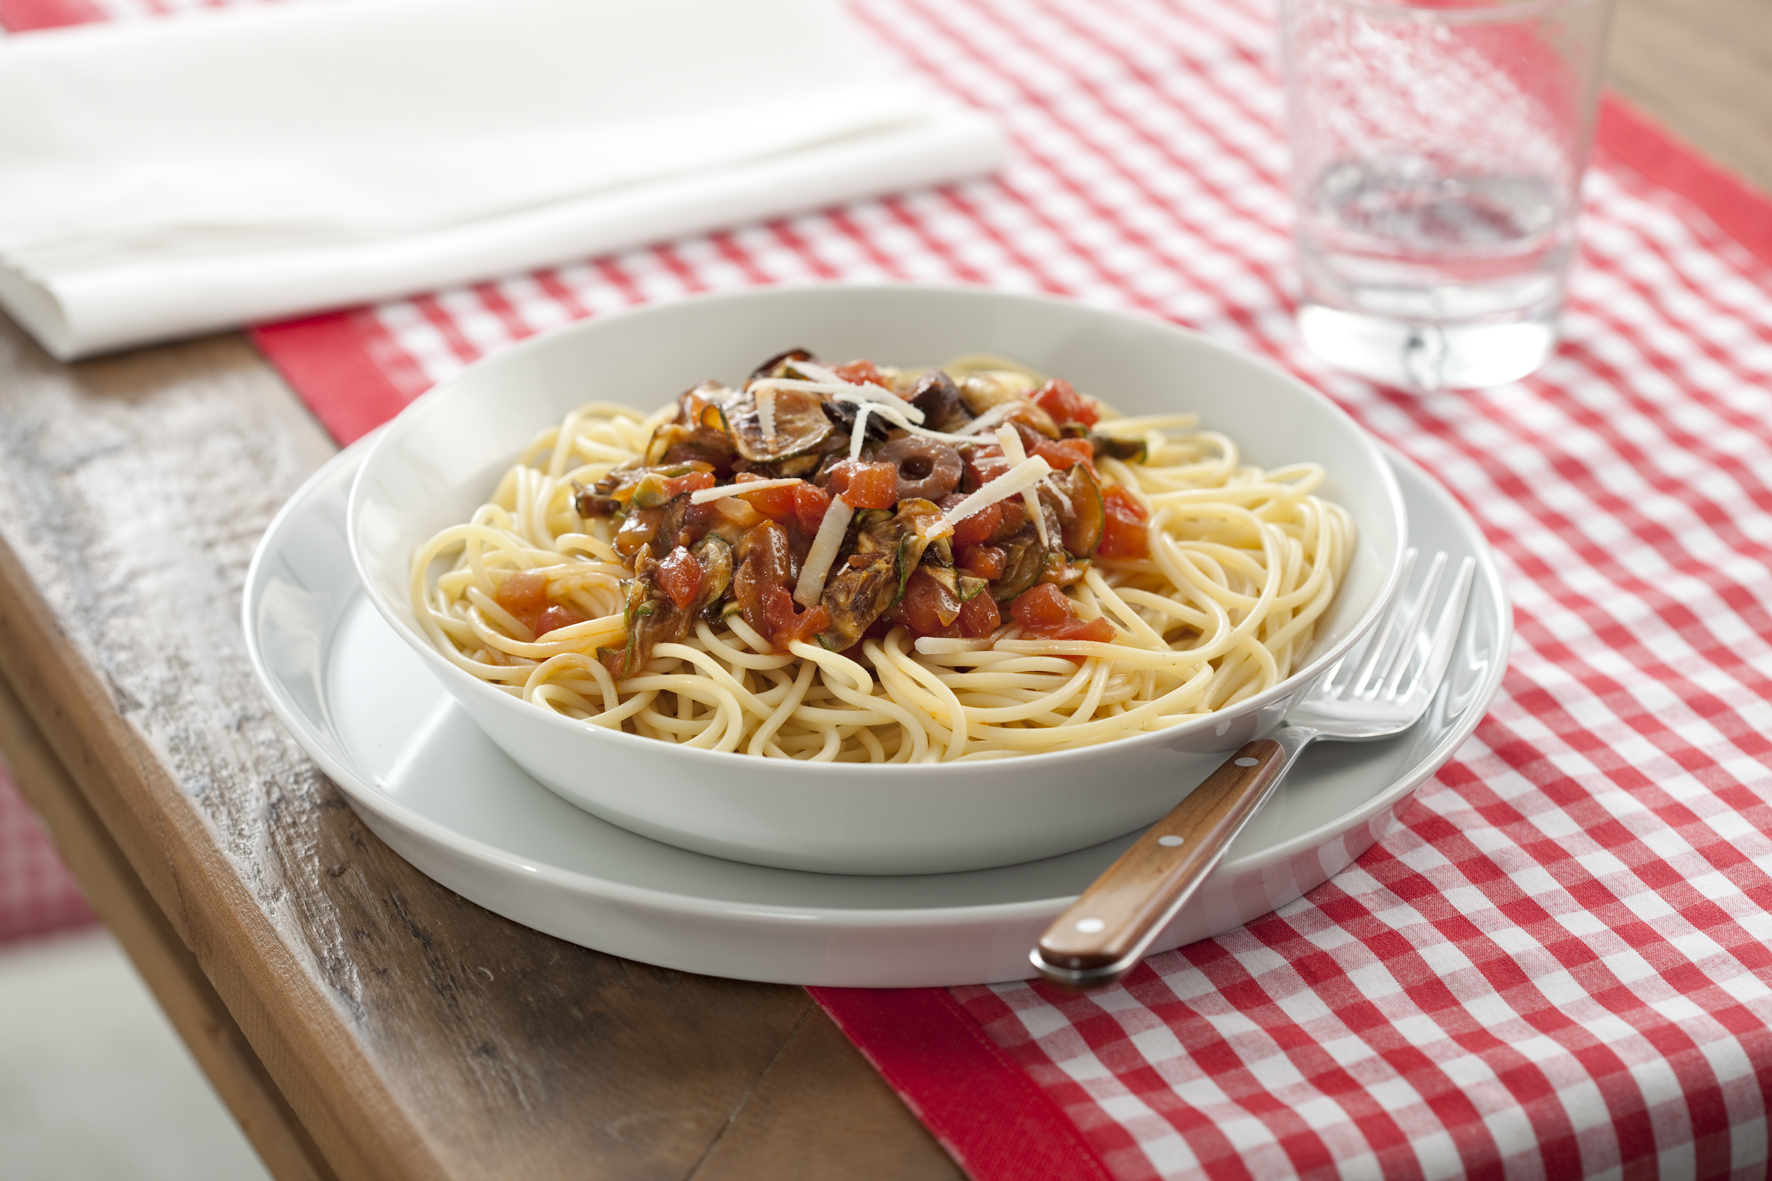 Macarronada (spaghetti a Bolognese)